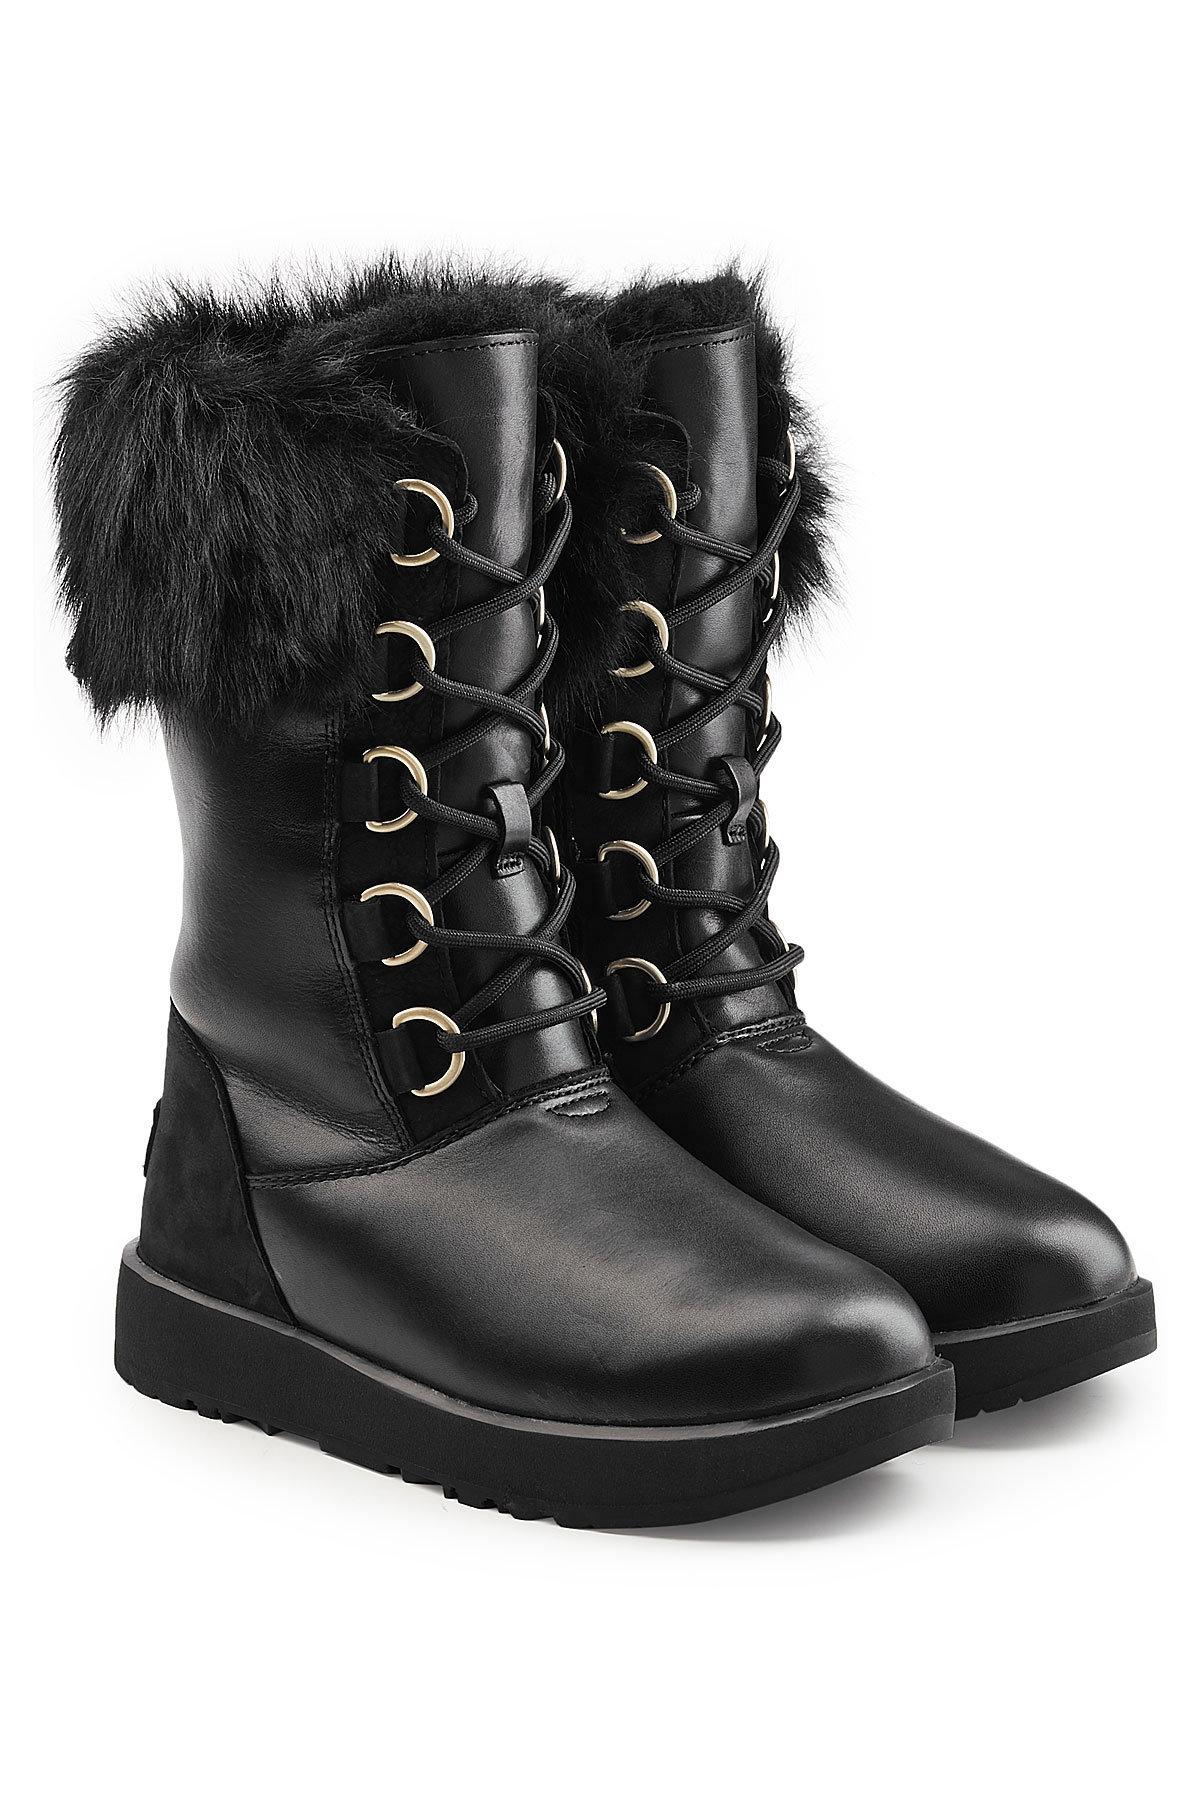 Ugg Aya Waterproof Leather Boots With 